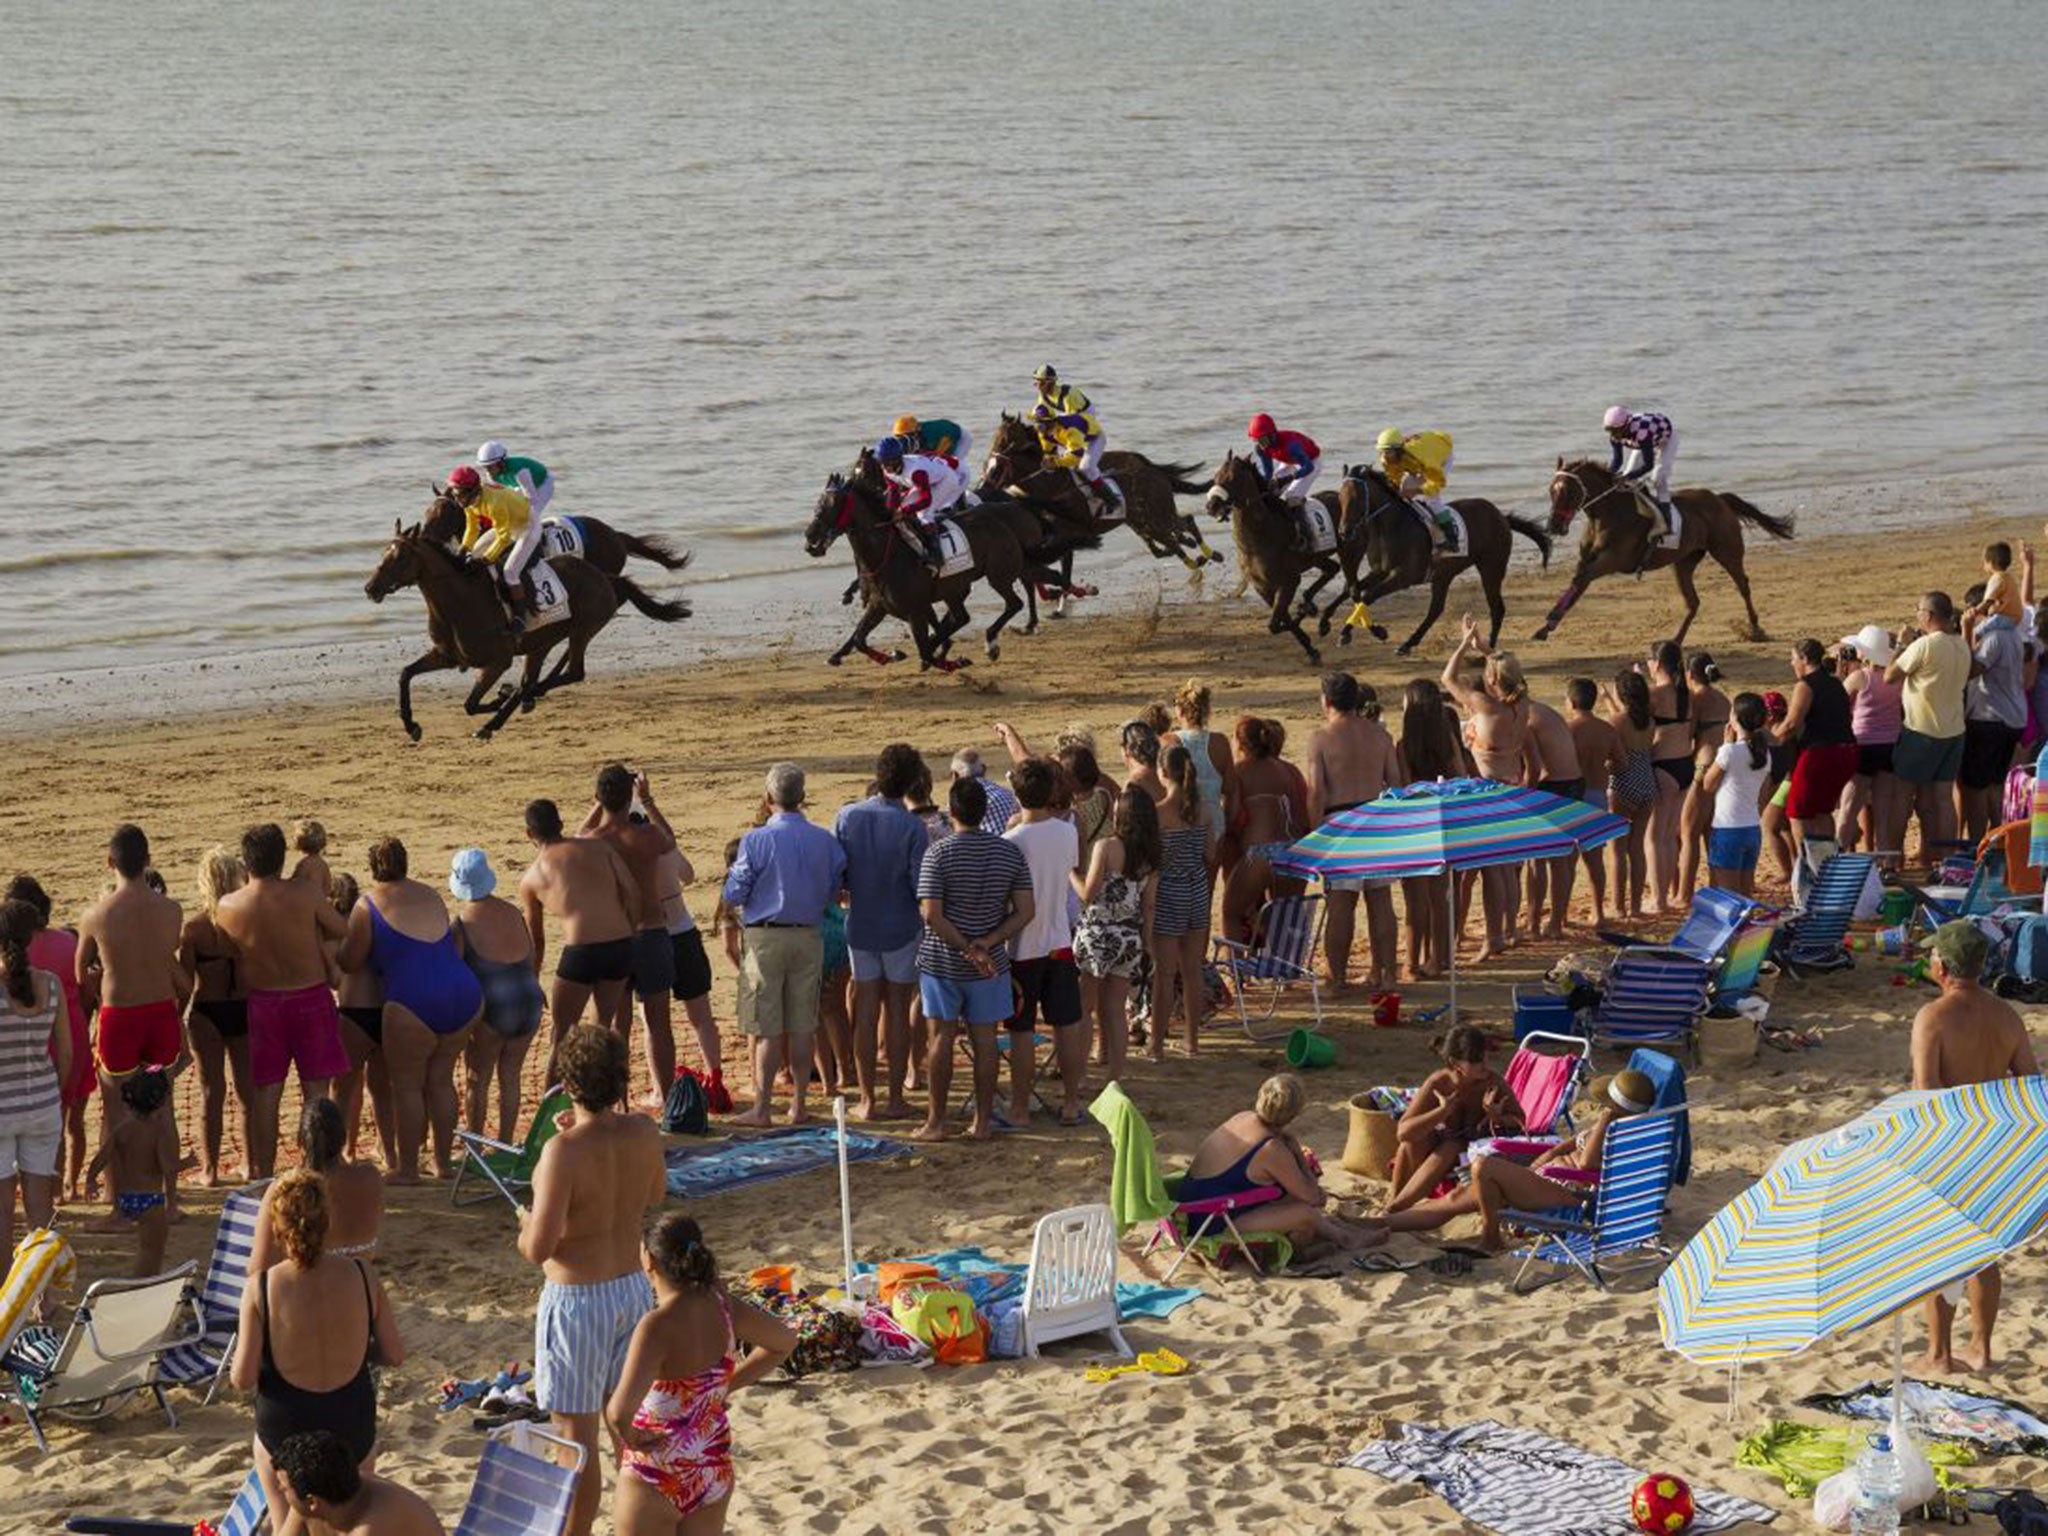 Horse-racing across the beach is a time-honoured Sanlúcar de Barrameda tradition